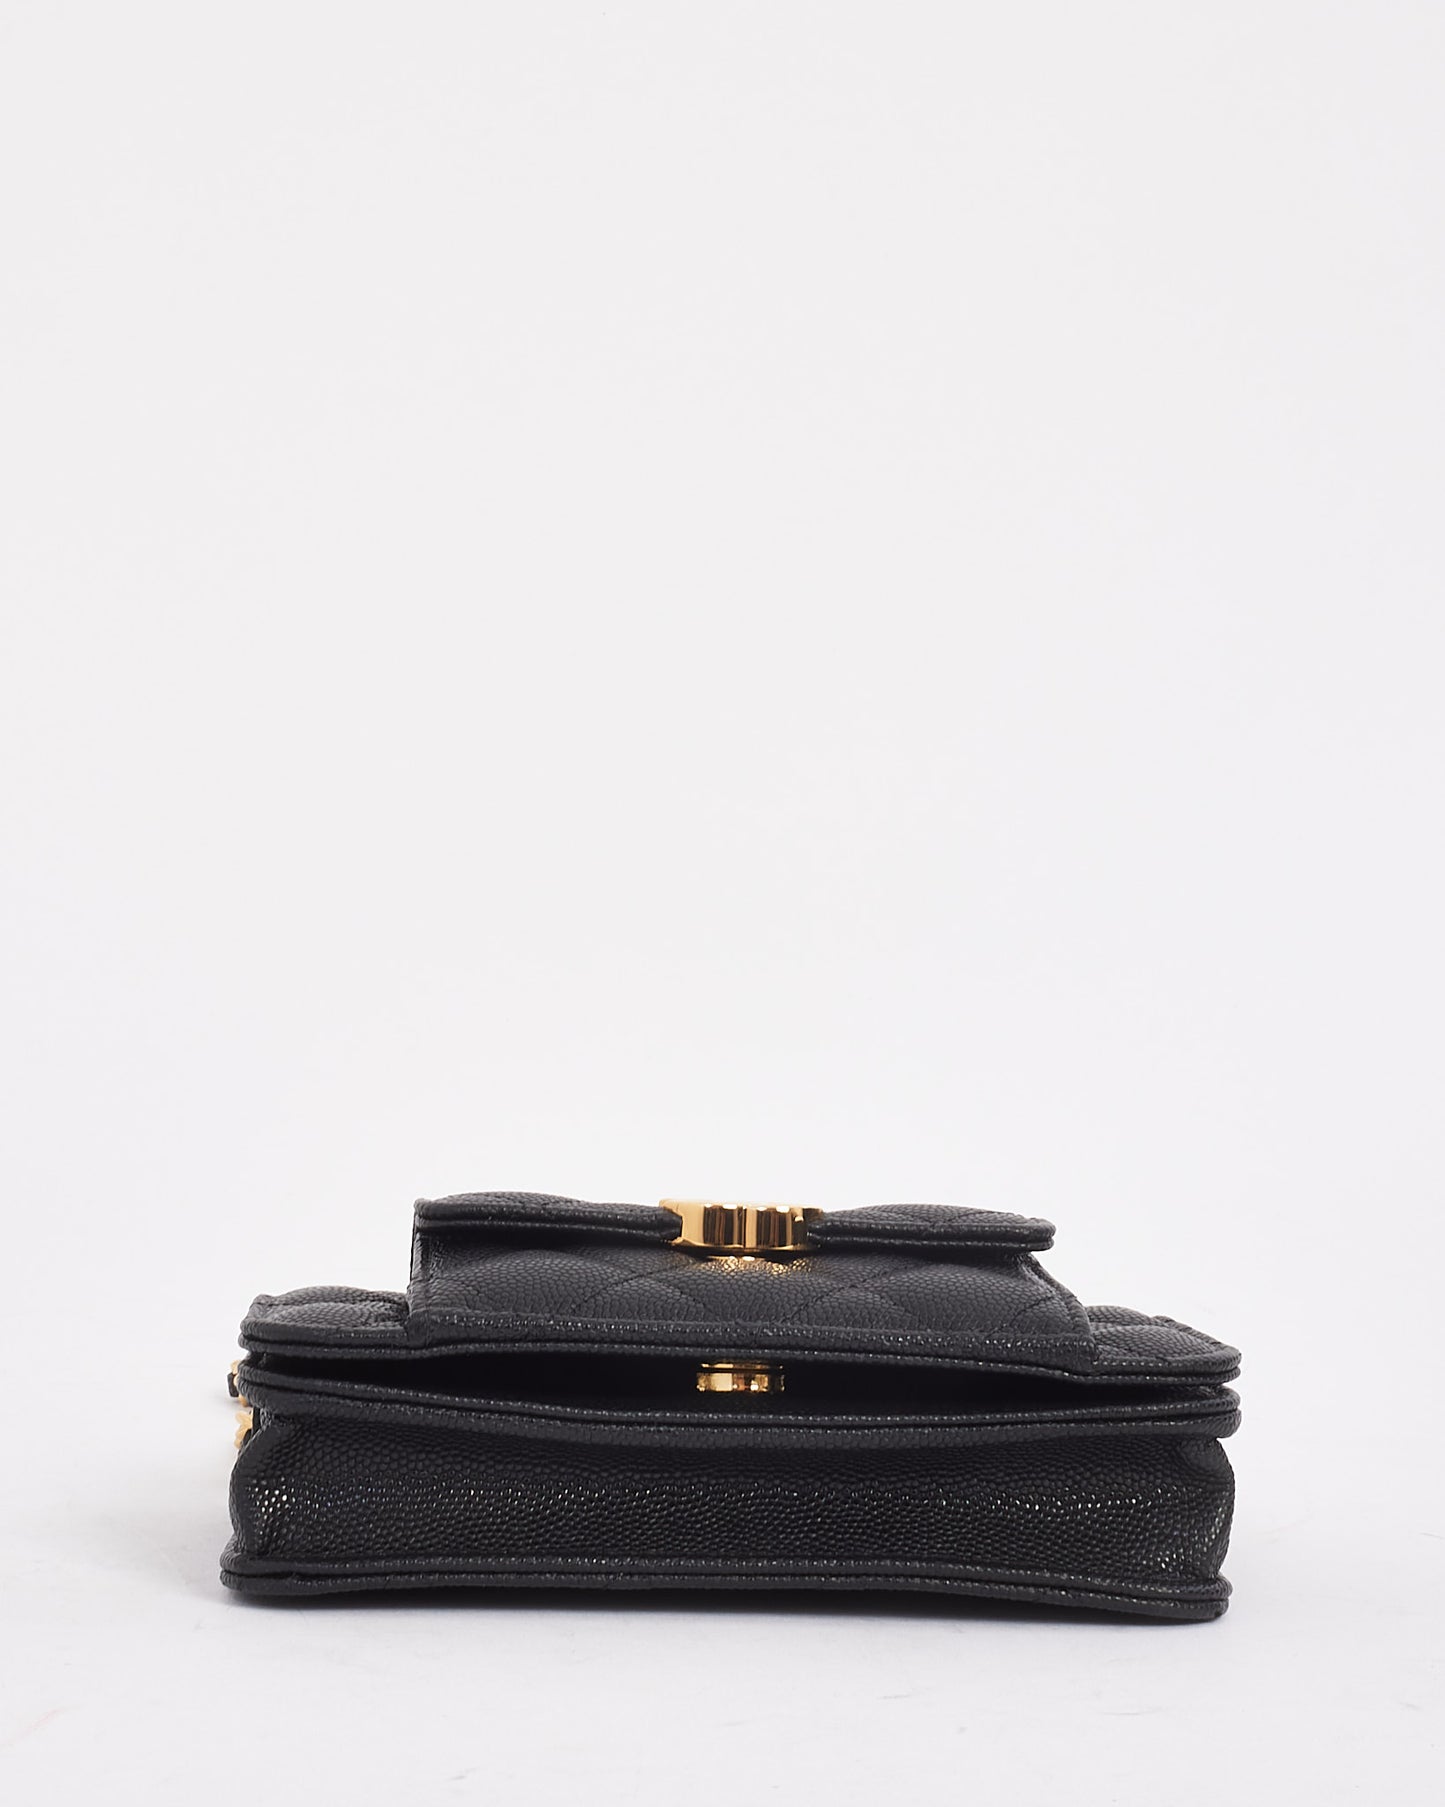 Pochette double poche en cuir caviar noir Chanel avec chaîne GHW